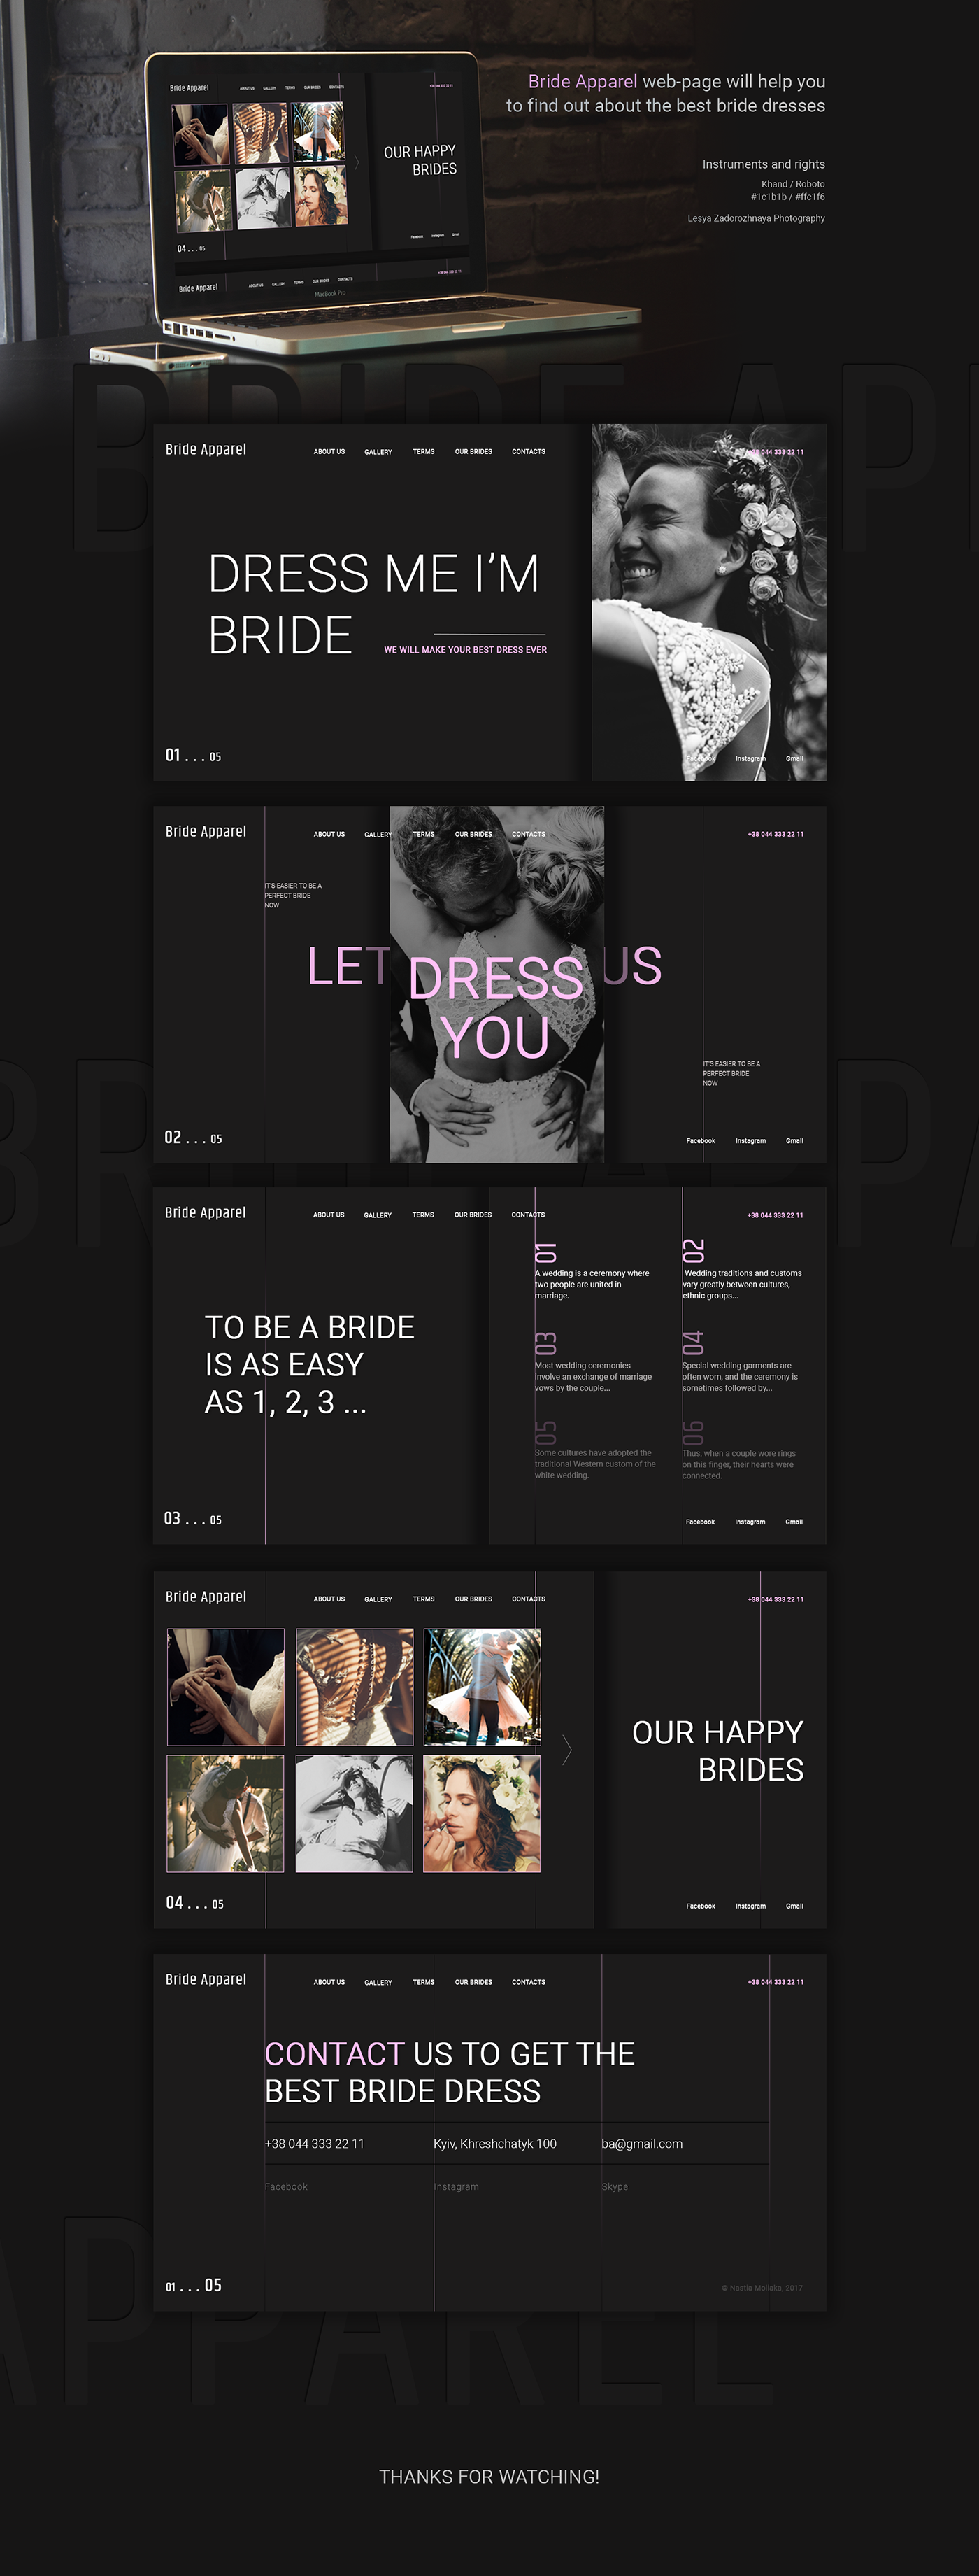 bride dress dresses wedding apparel web-design black pink